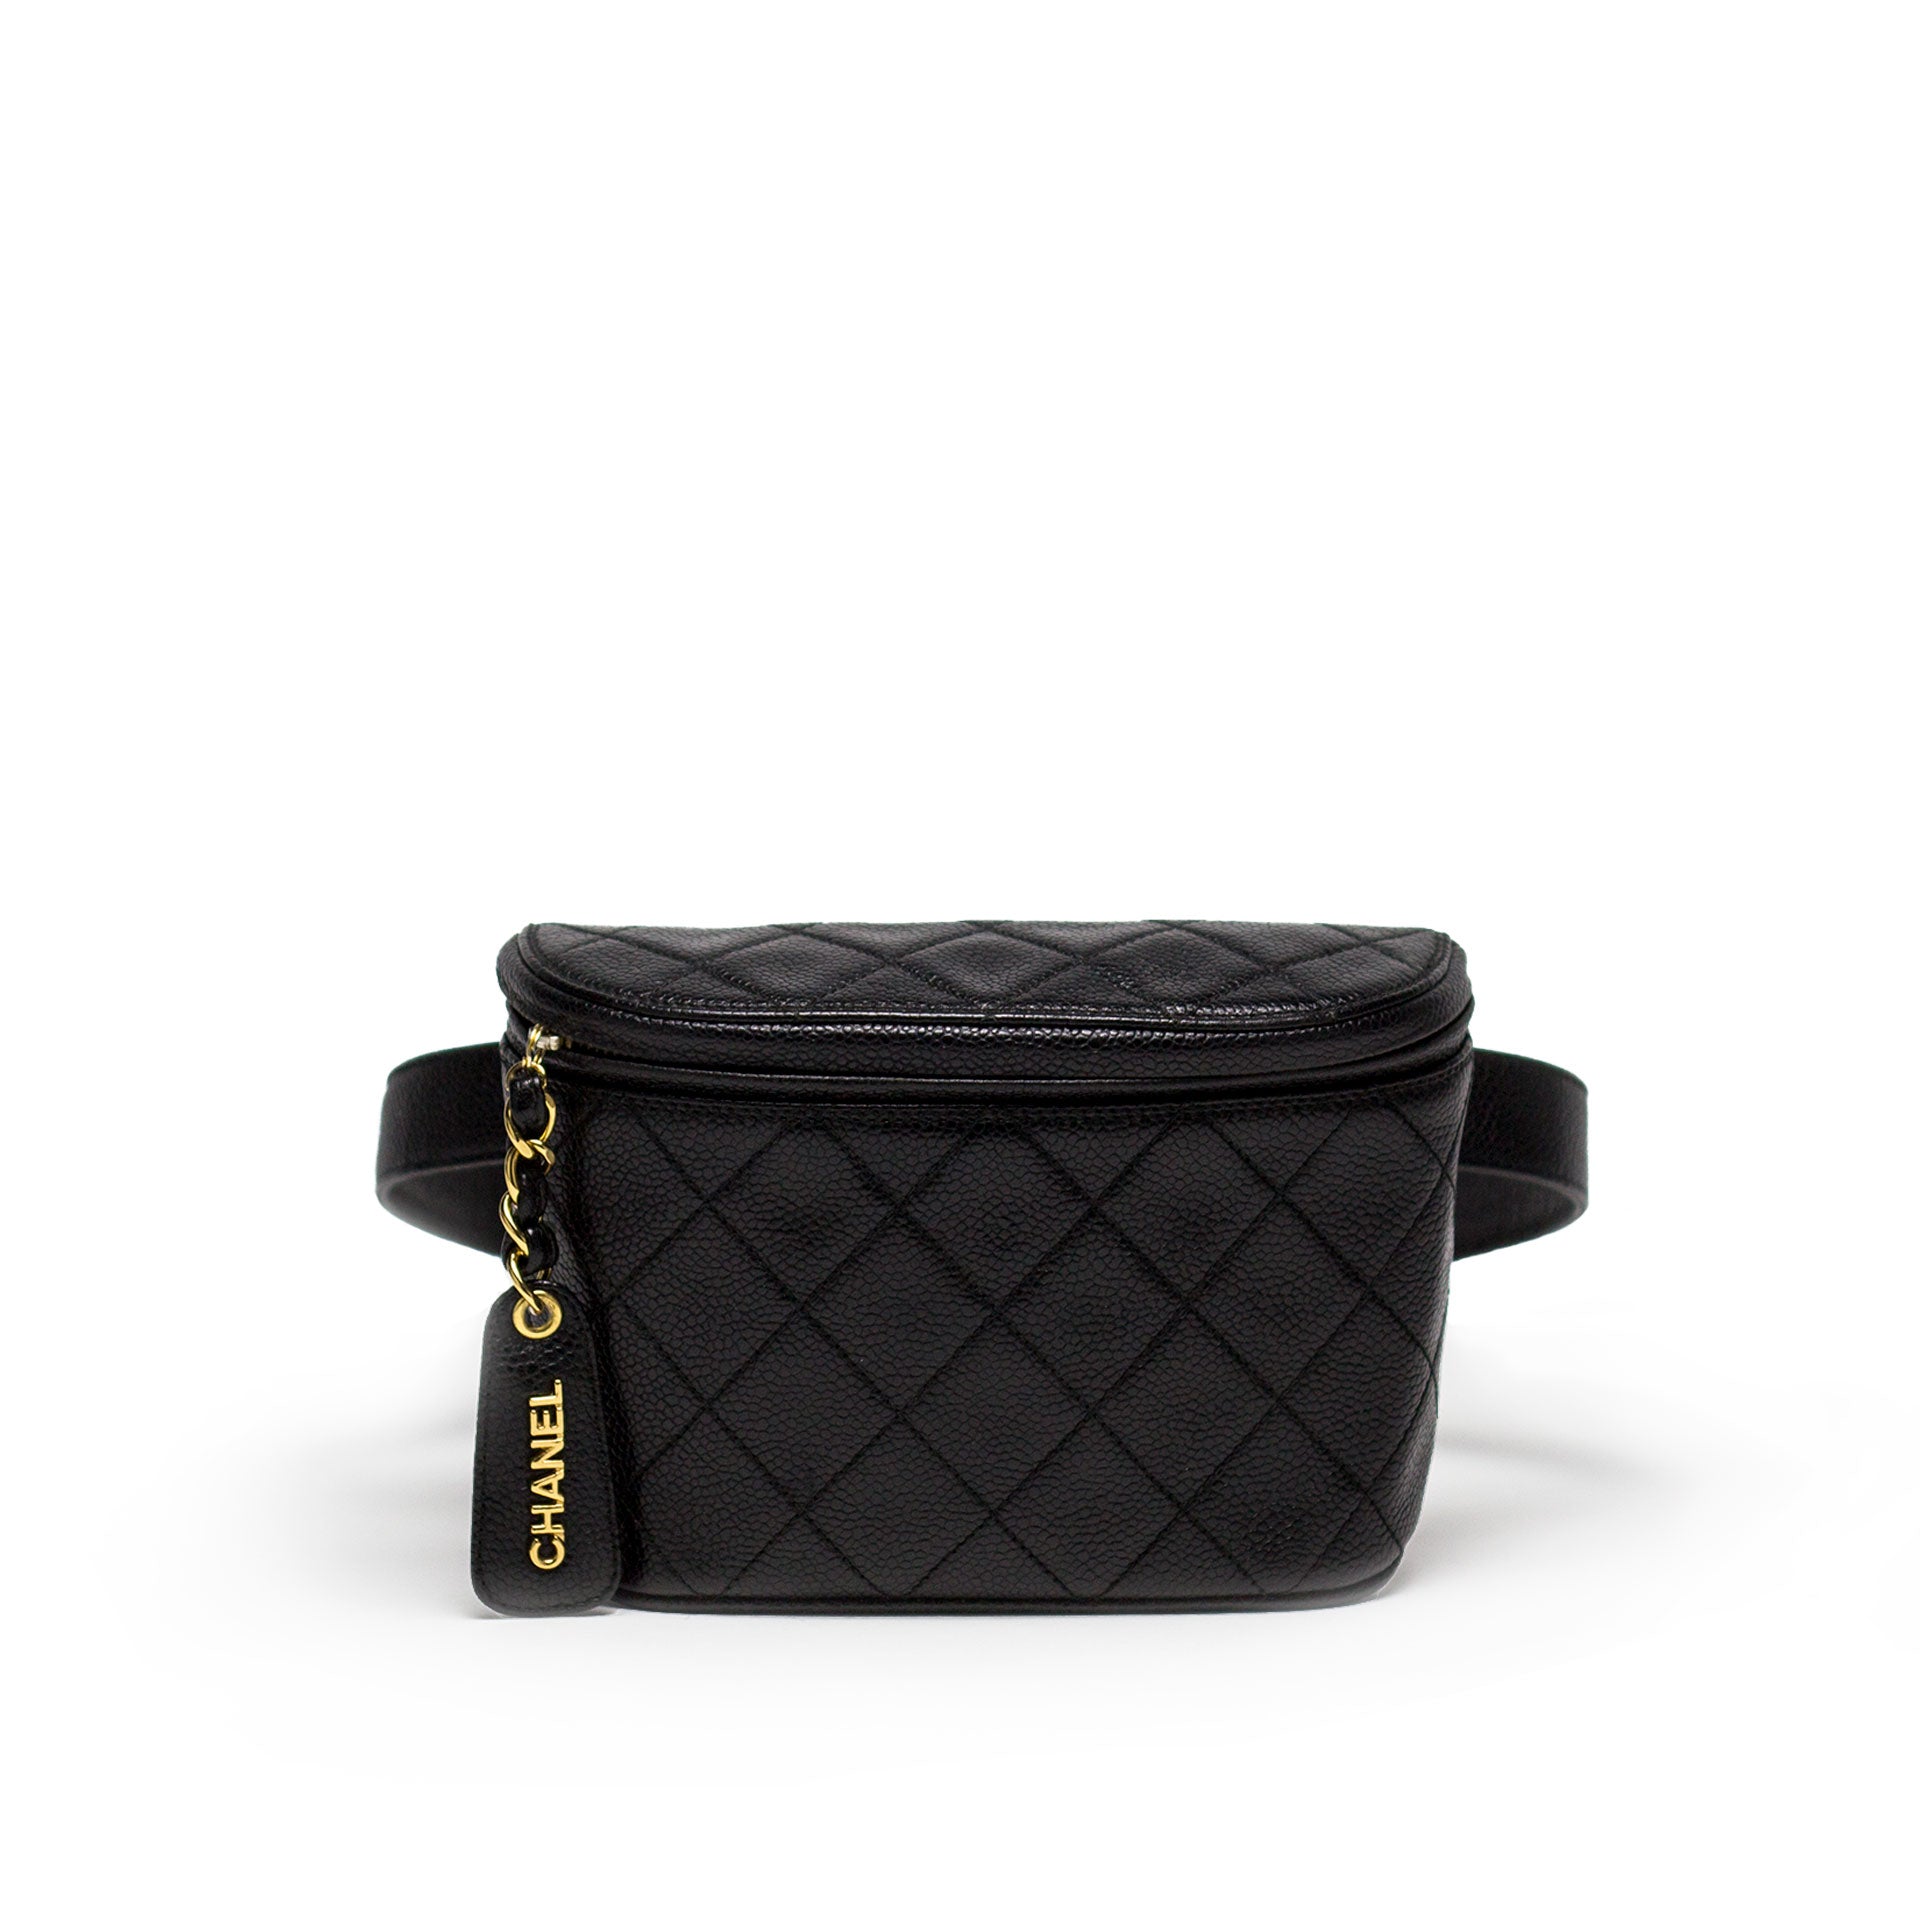 Chanel Belt Bag Rare Vintage 90s Mini Fanny Pack Waist Black Leather  Baguette